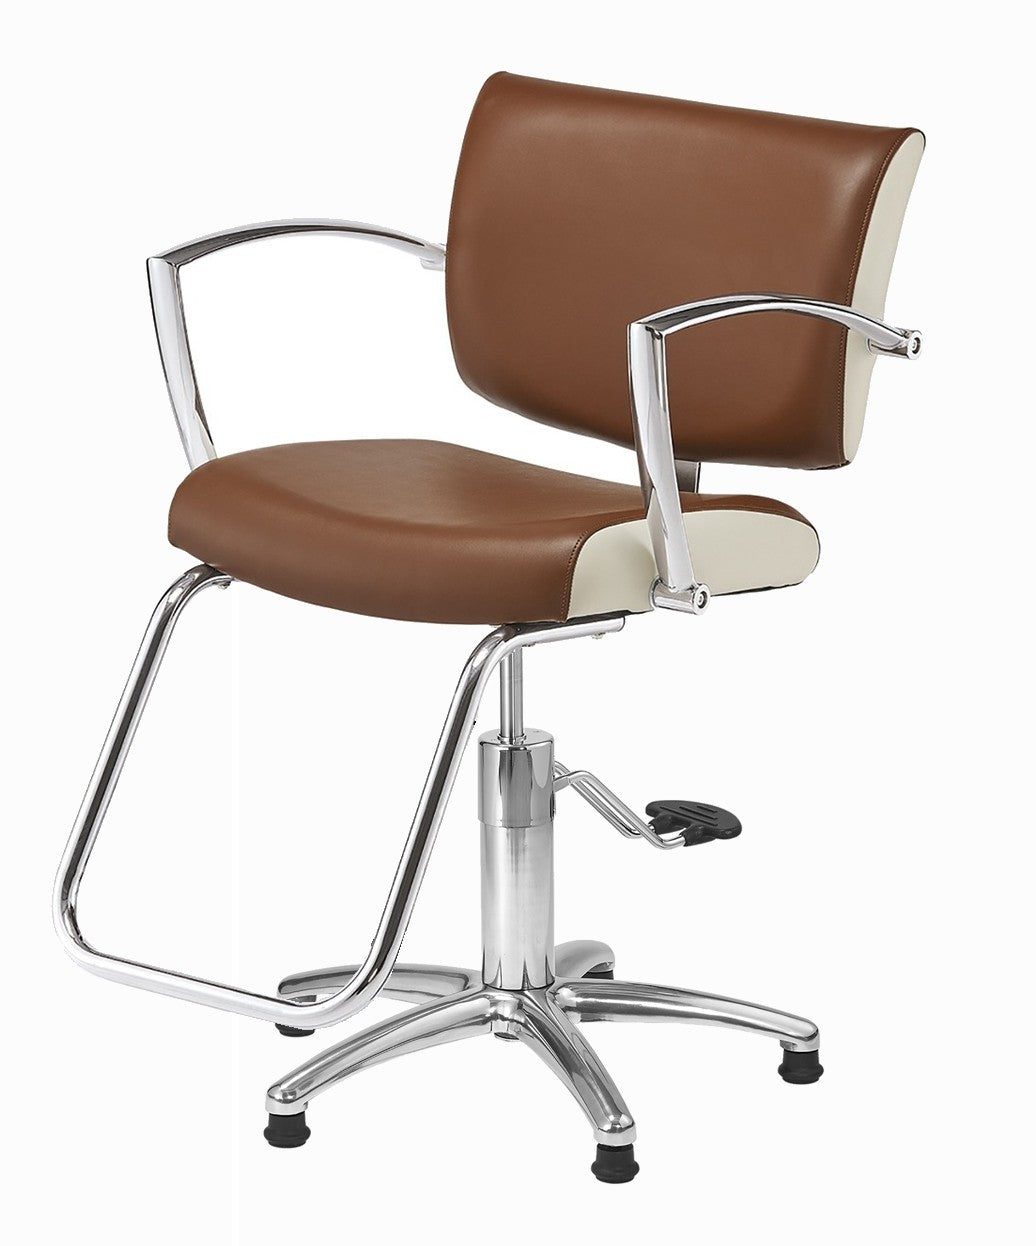 Pibbs 5806 Rosa Hydraulic Styling Chair